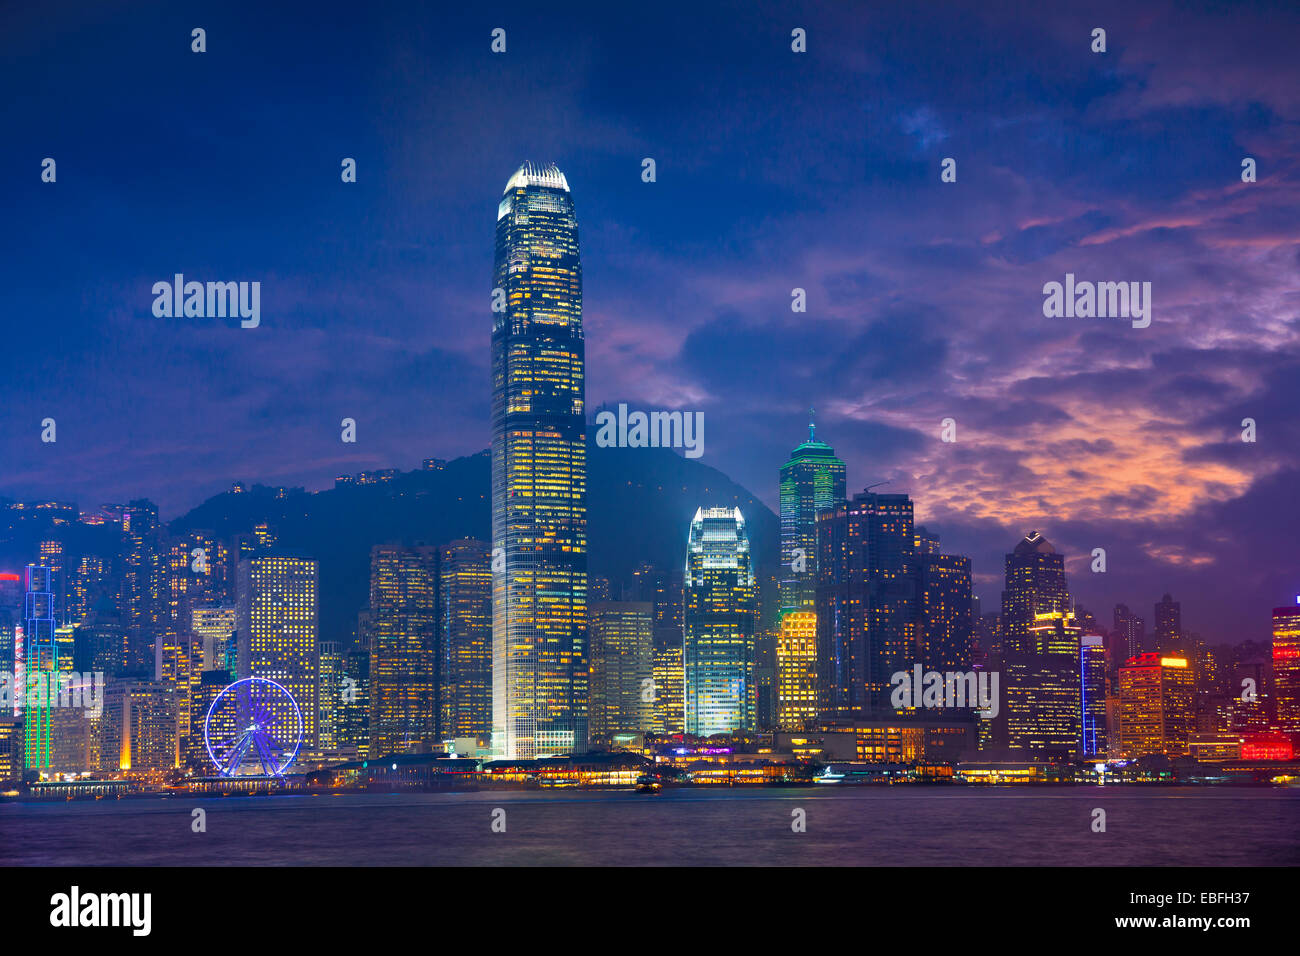 Hong Kong. Image of Hong Kong with many skyscrapers during dramatic sunset. Stock Photo